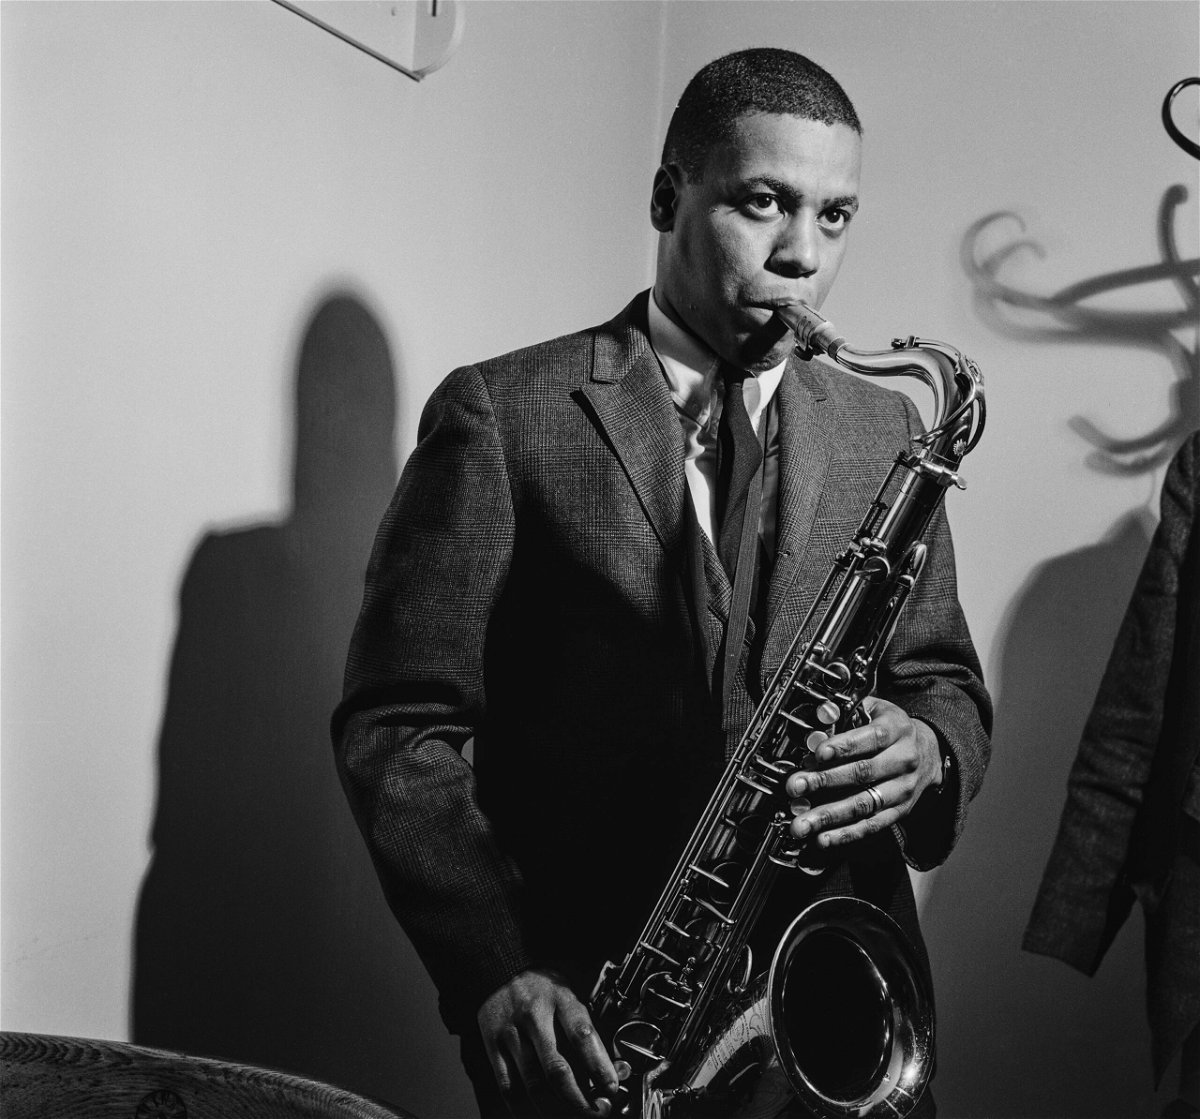 <i>Bill Wagg/Redferns/Getty Images</i><br/>American jazz saxophonist Wayne Shorter